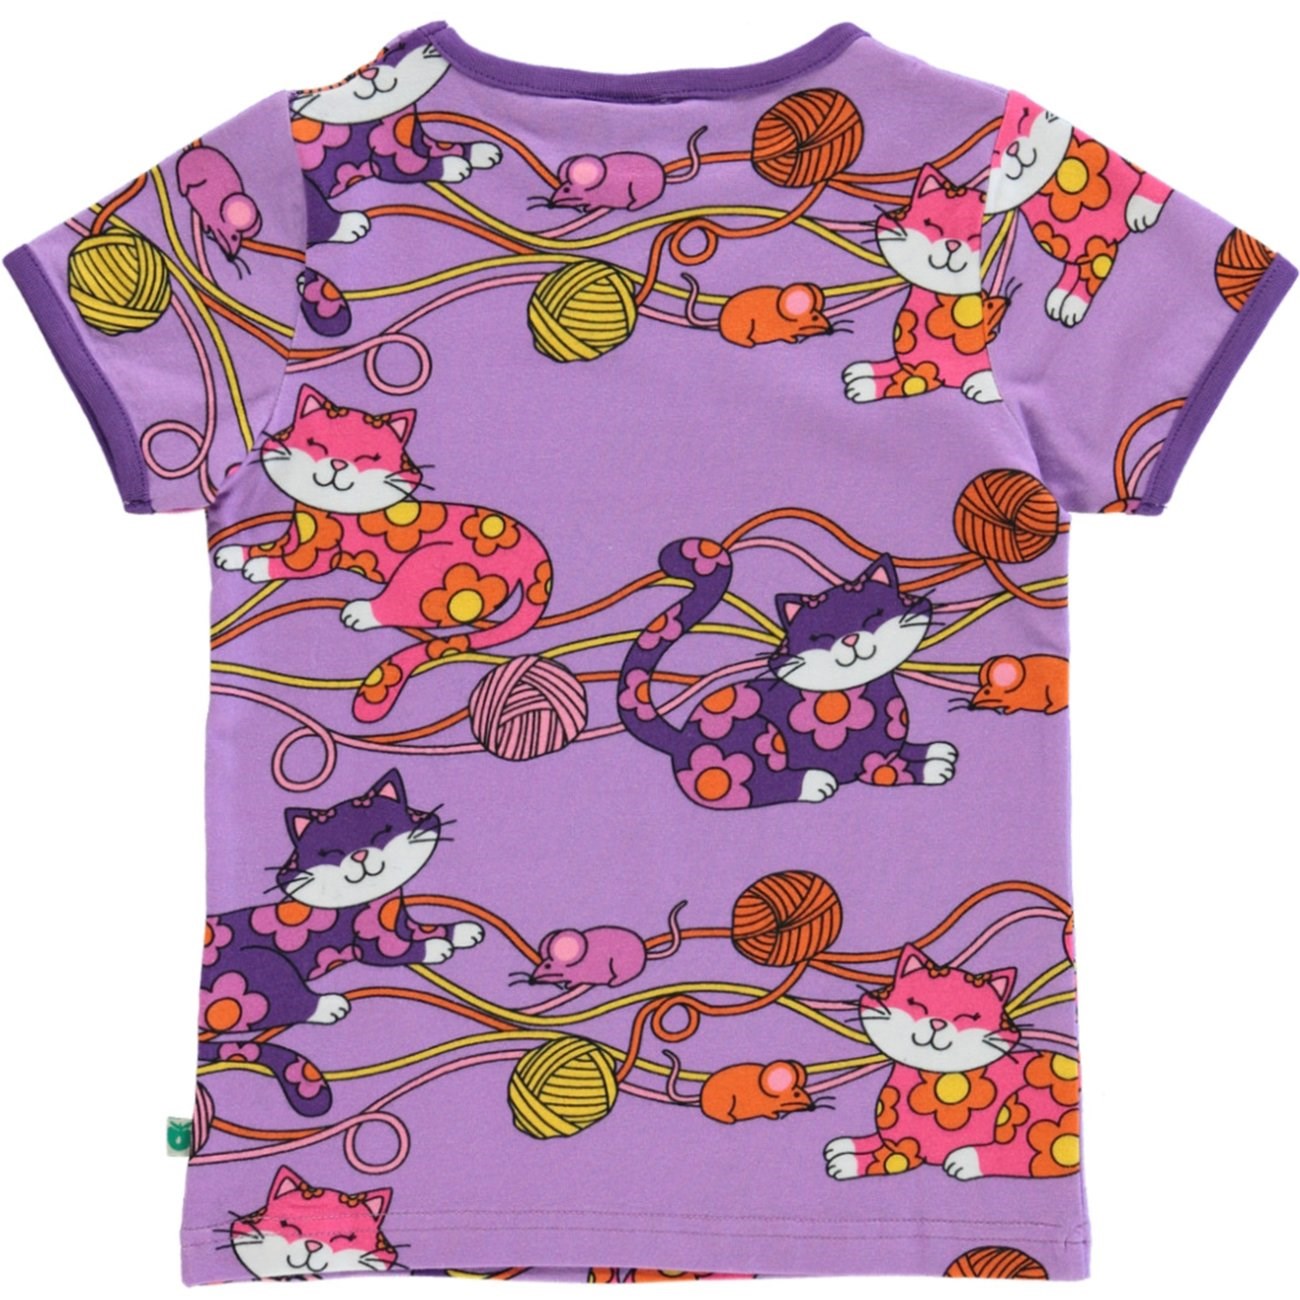 Småfolk Viola T-shirt Med Katter